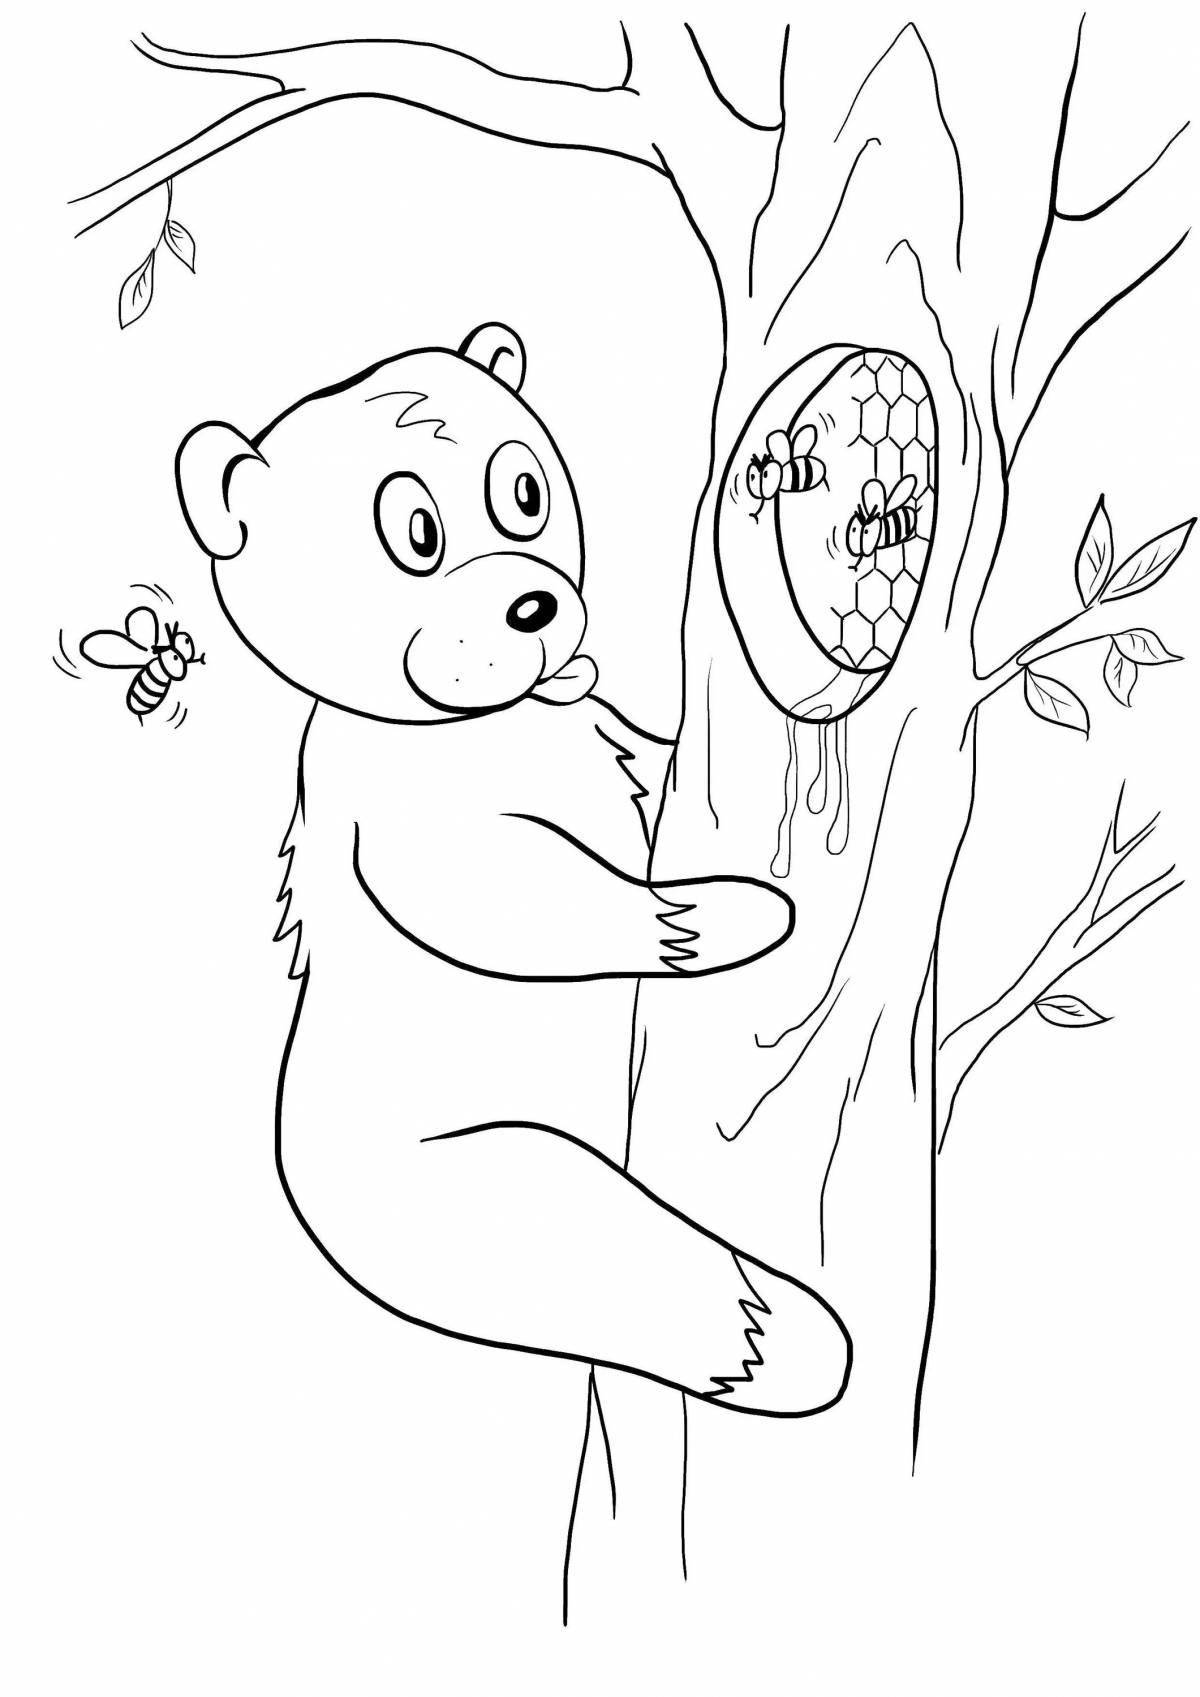 Раскраска яркий медведь в лесу